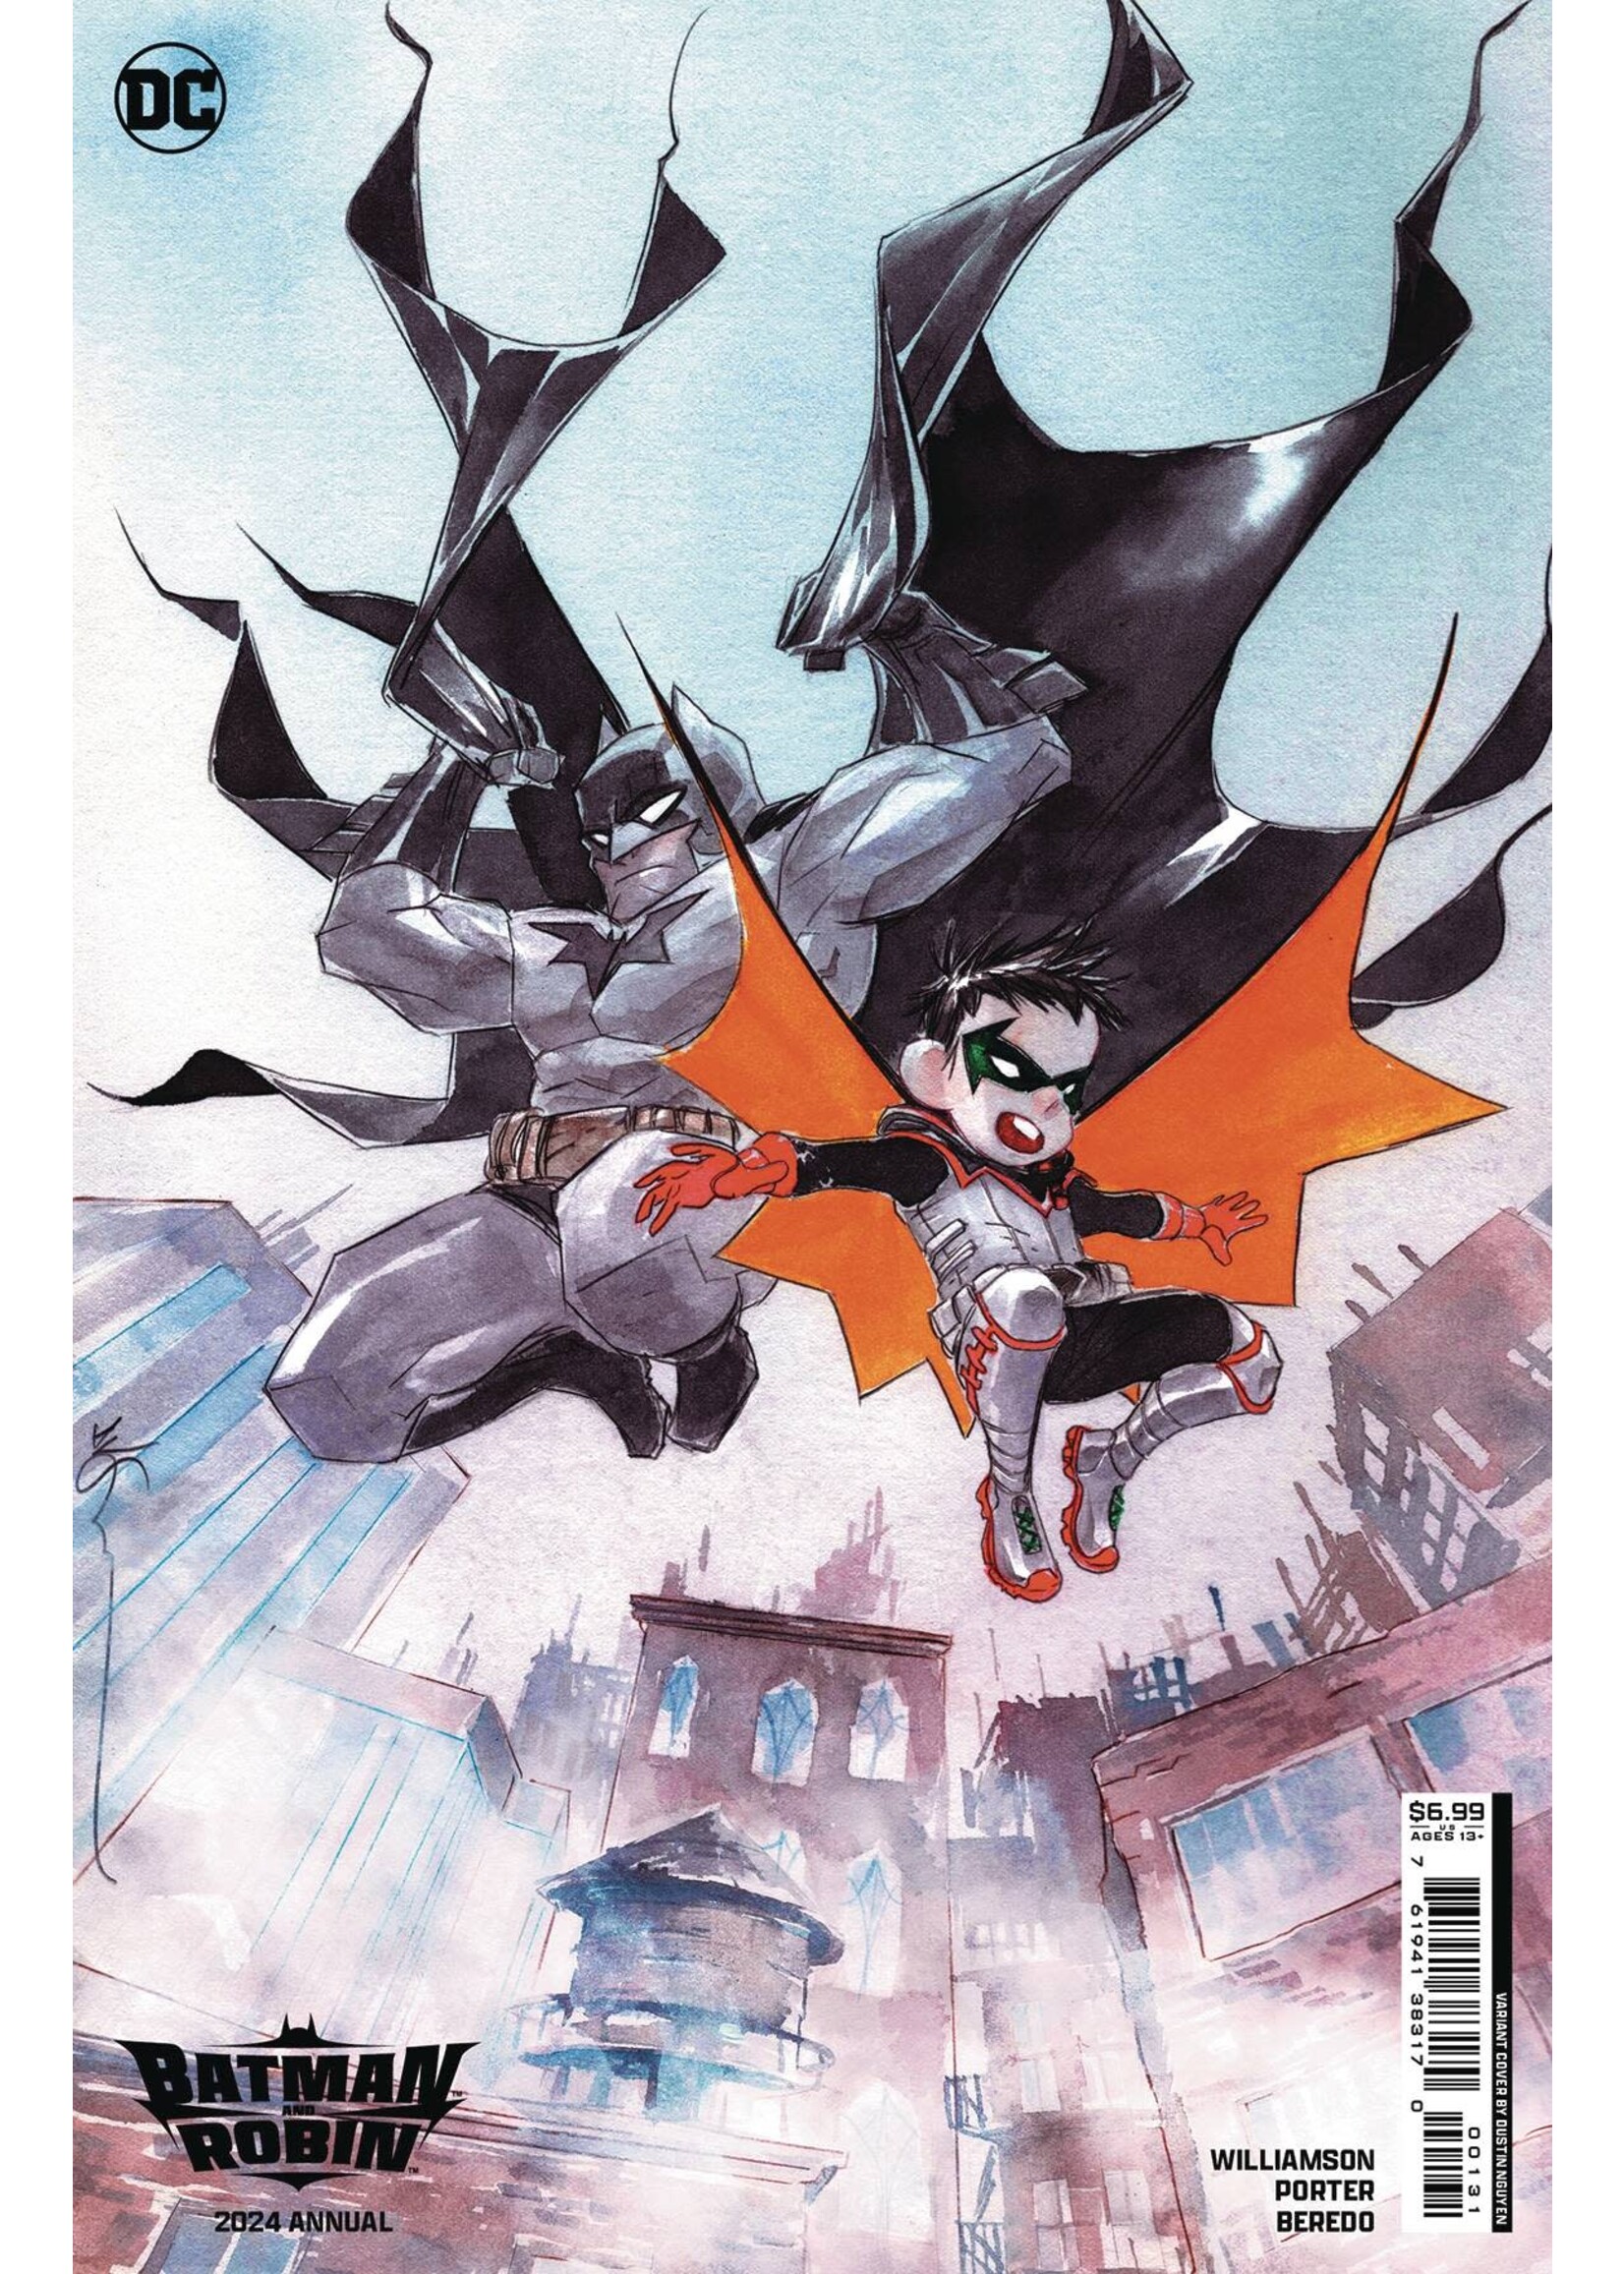 DC COMICS BATMAN AND ROBIN 2024 ANNUAL #1 NGUYEN